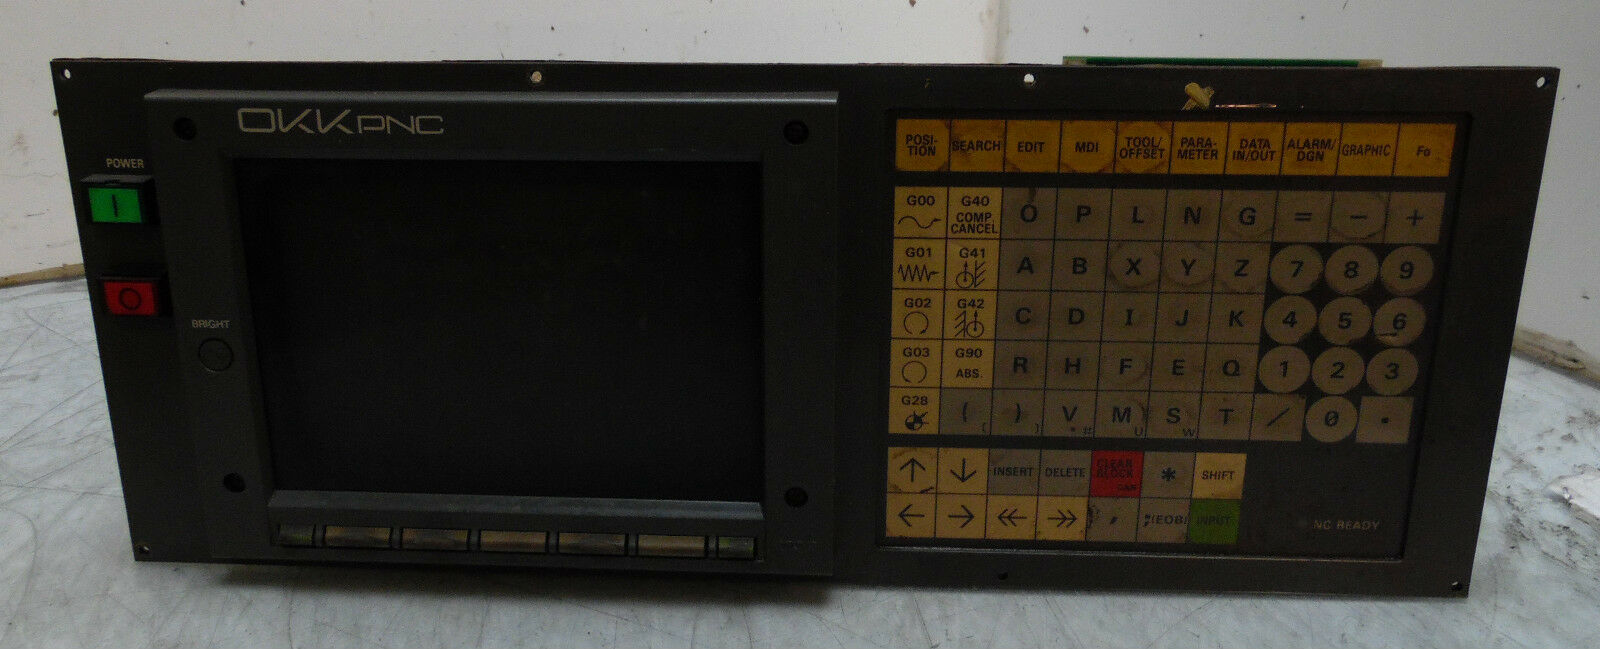 三菱 Mitsubishi Betrieb Board, Unit # Ok901b-2, W/Bn624a810g51 